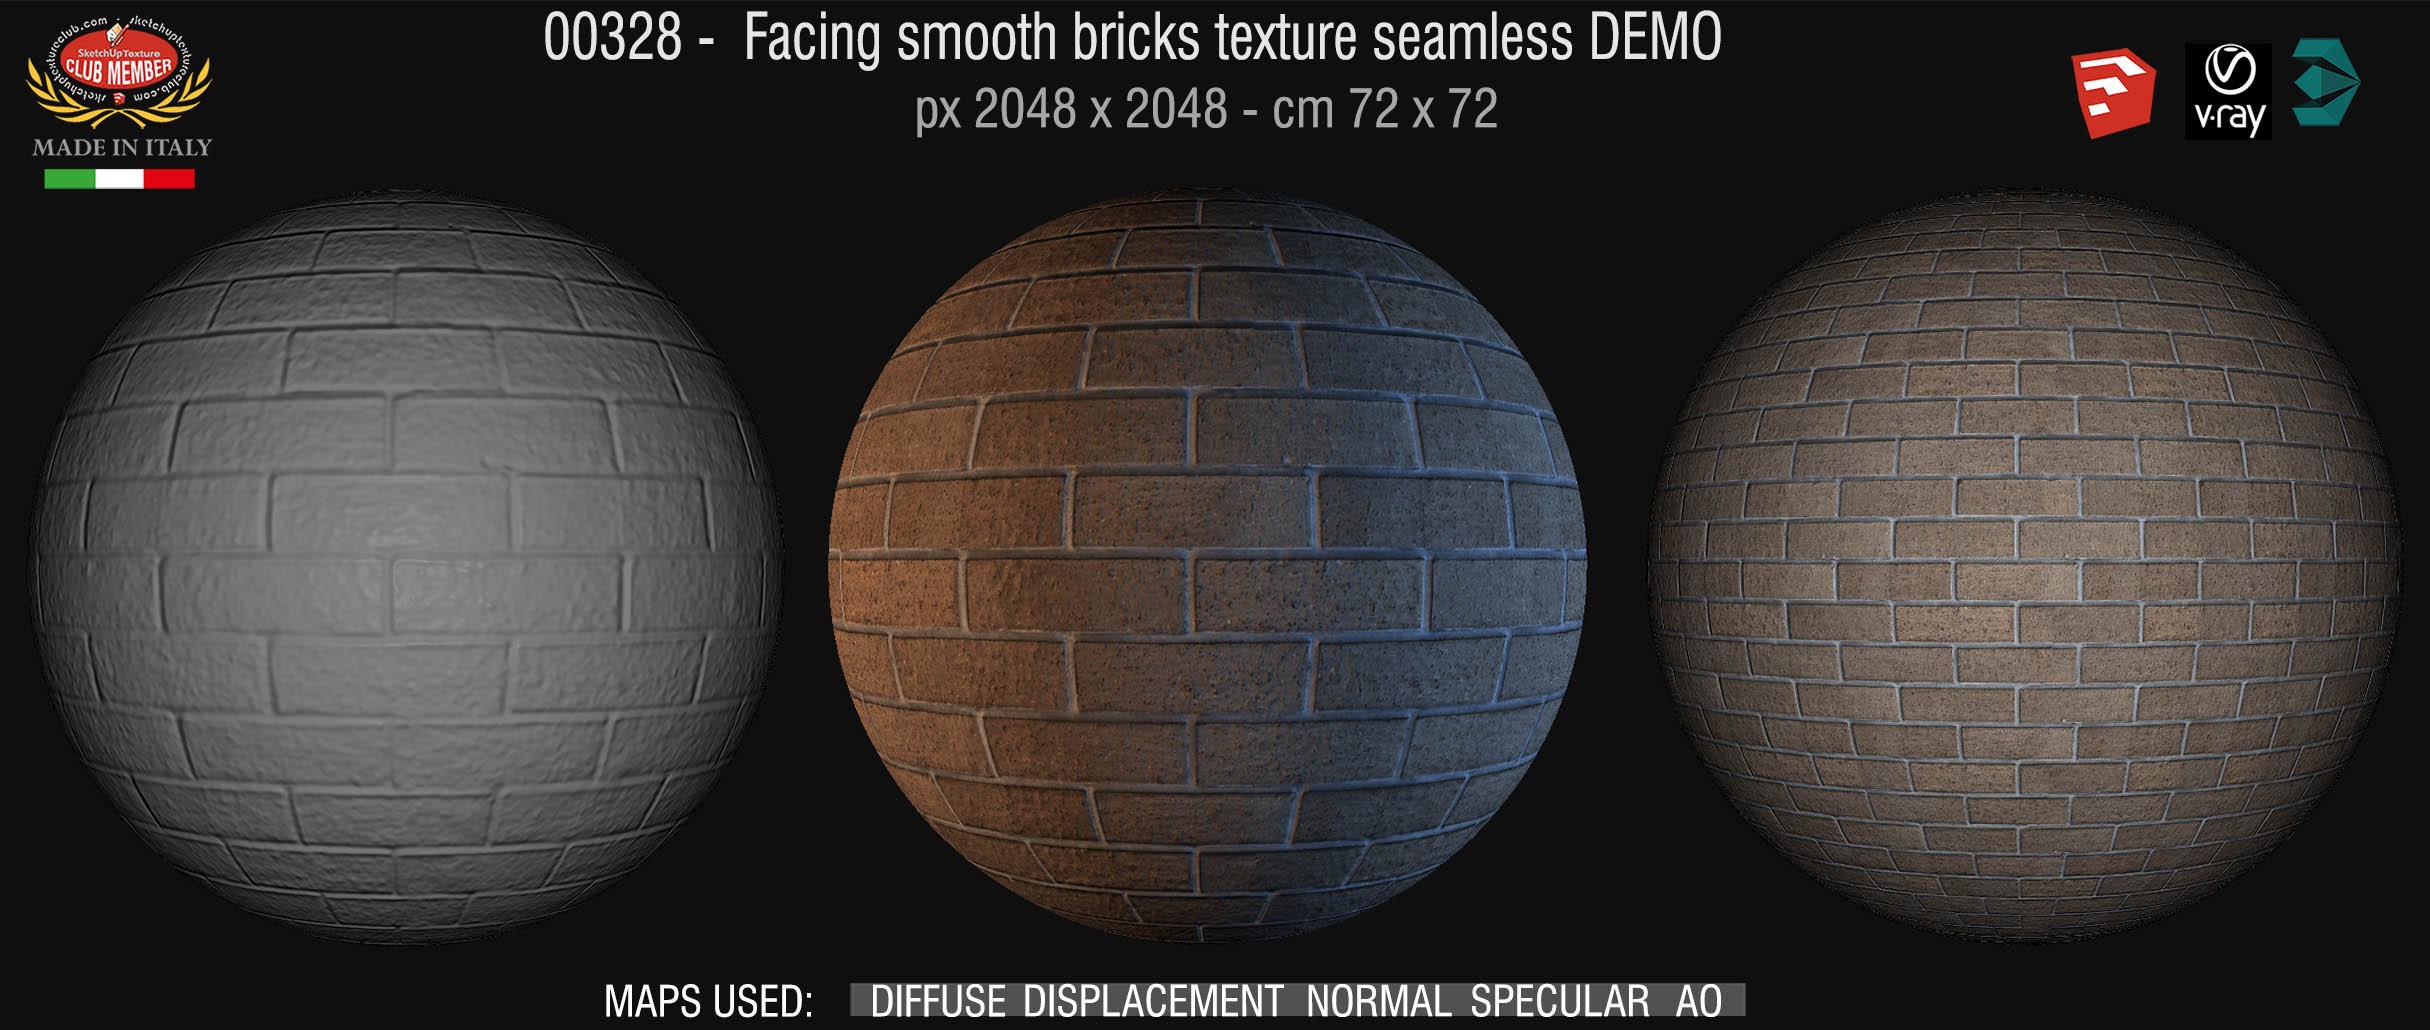 00328 Facing smooth bricks texture seamless + maps DEMO